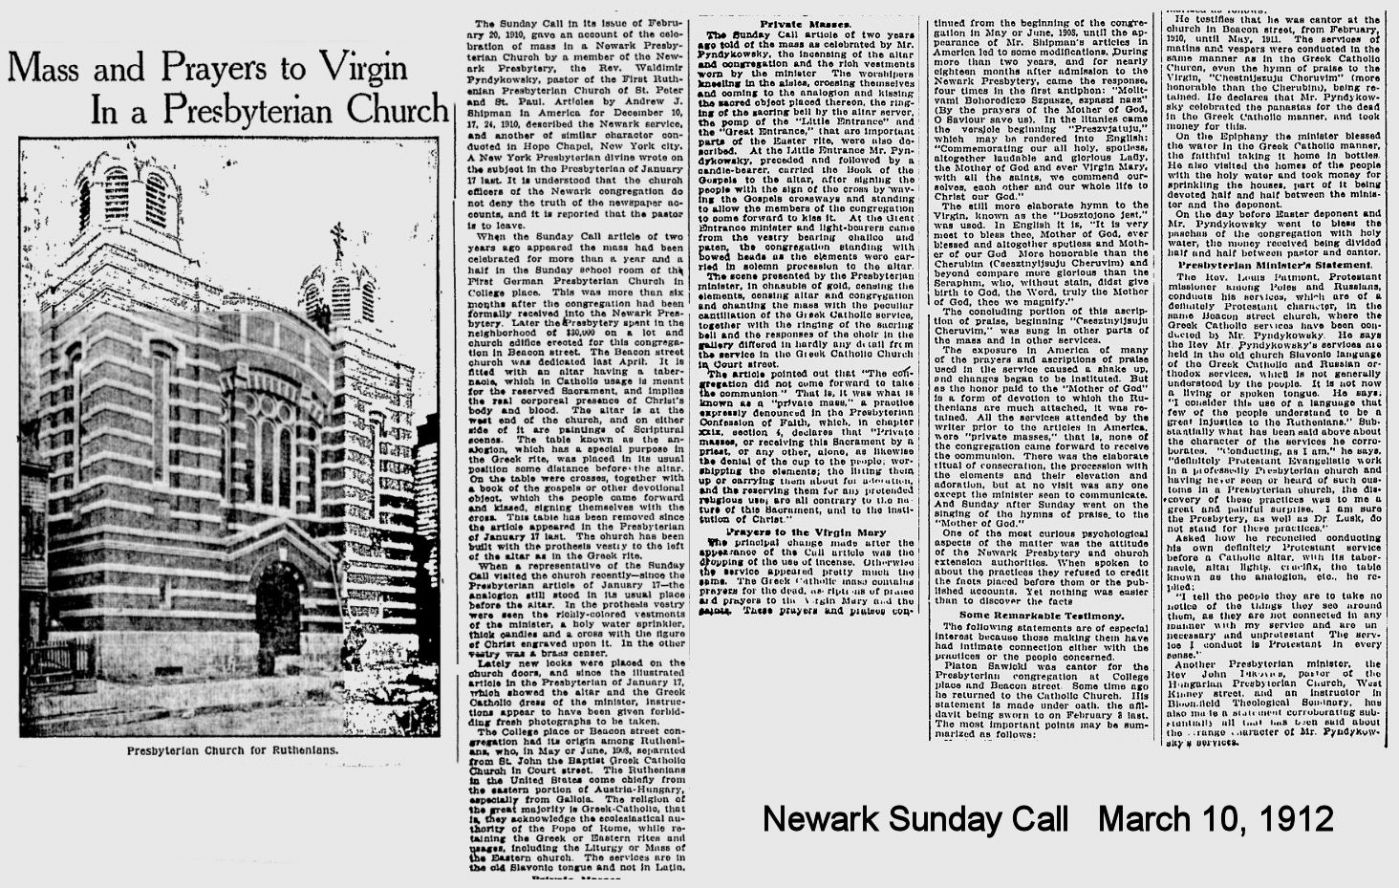 Mass and Prayers to Virgin in a Presbyterian Church
March 10, 1912
